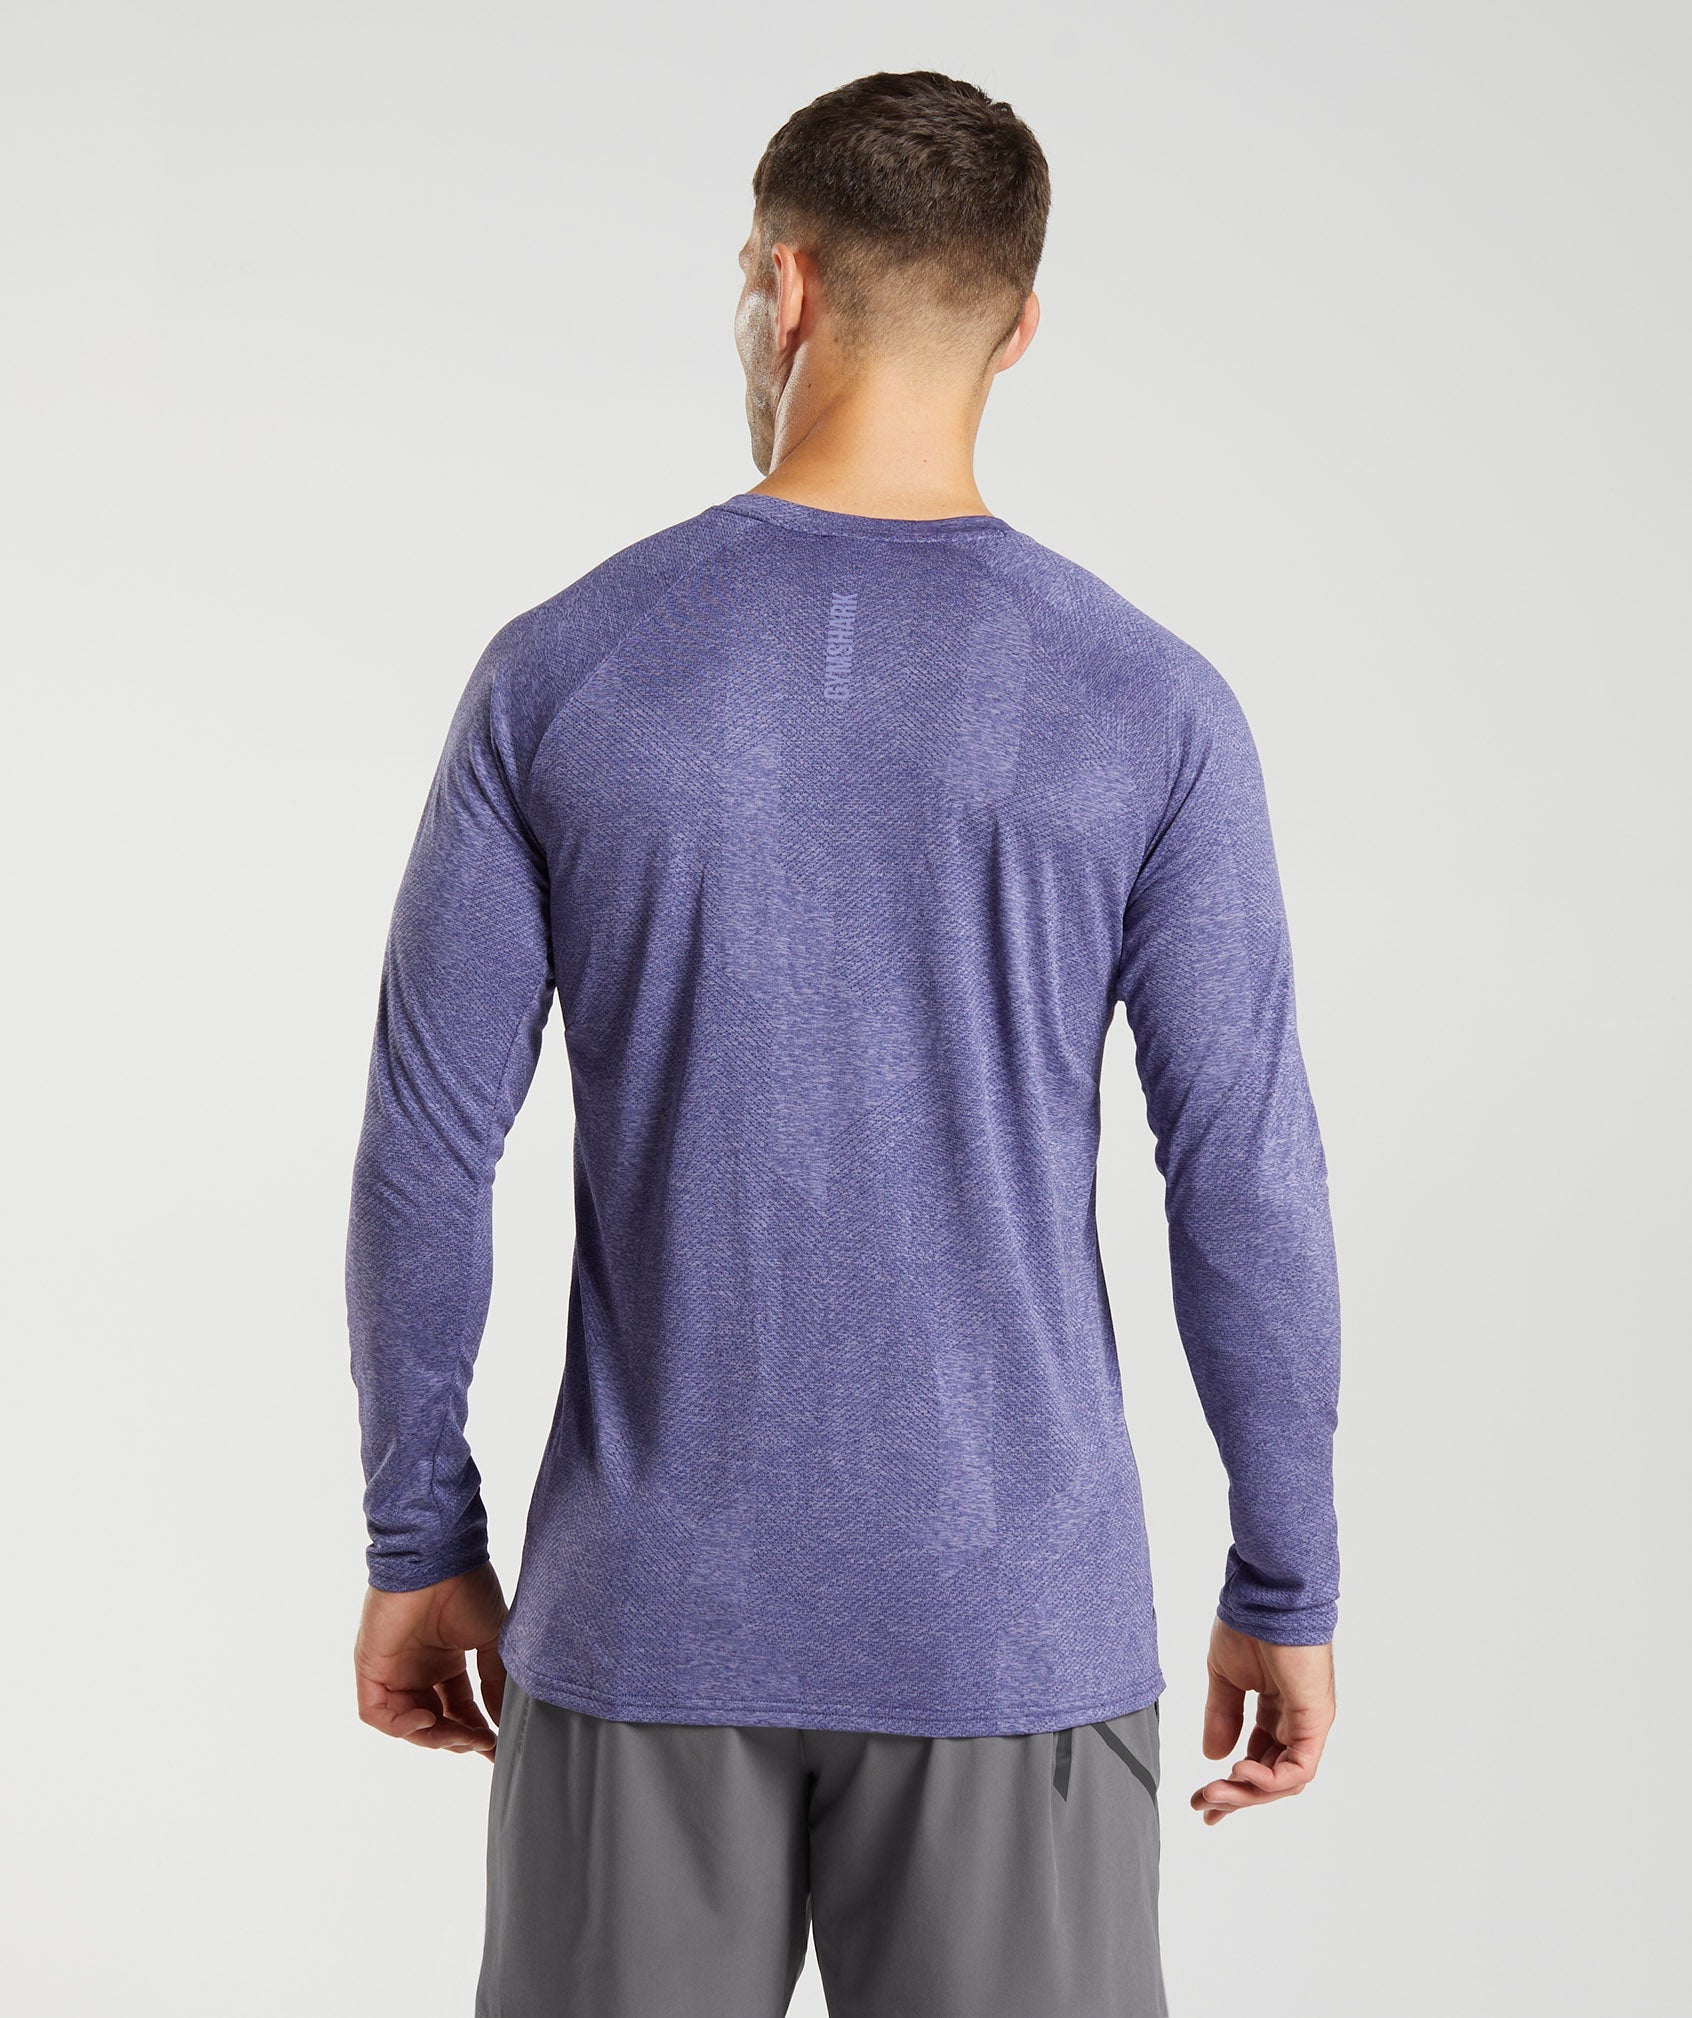 Apex Long Sleeve T-Shirt in Neptune Purple/Velvet Purple - view 2